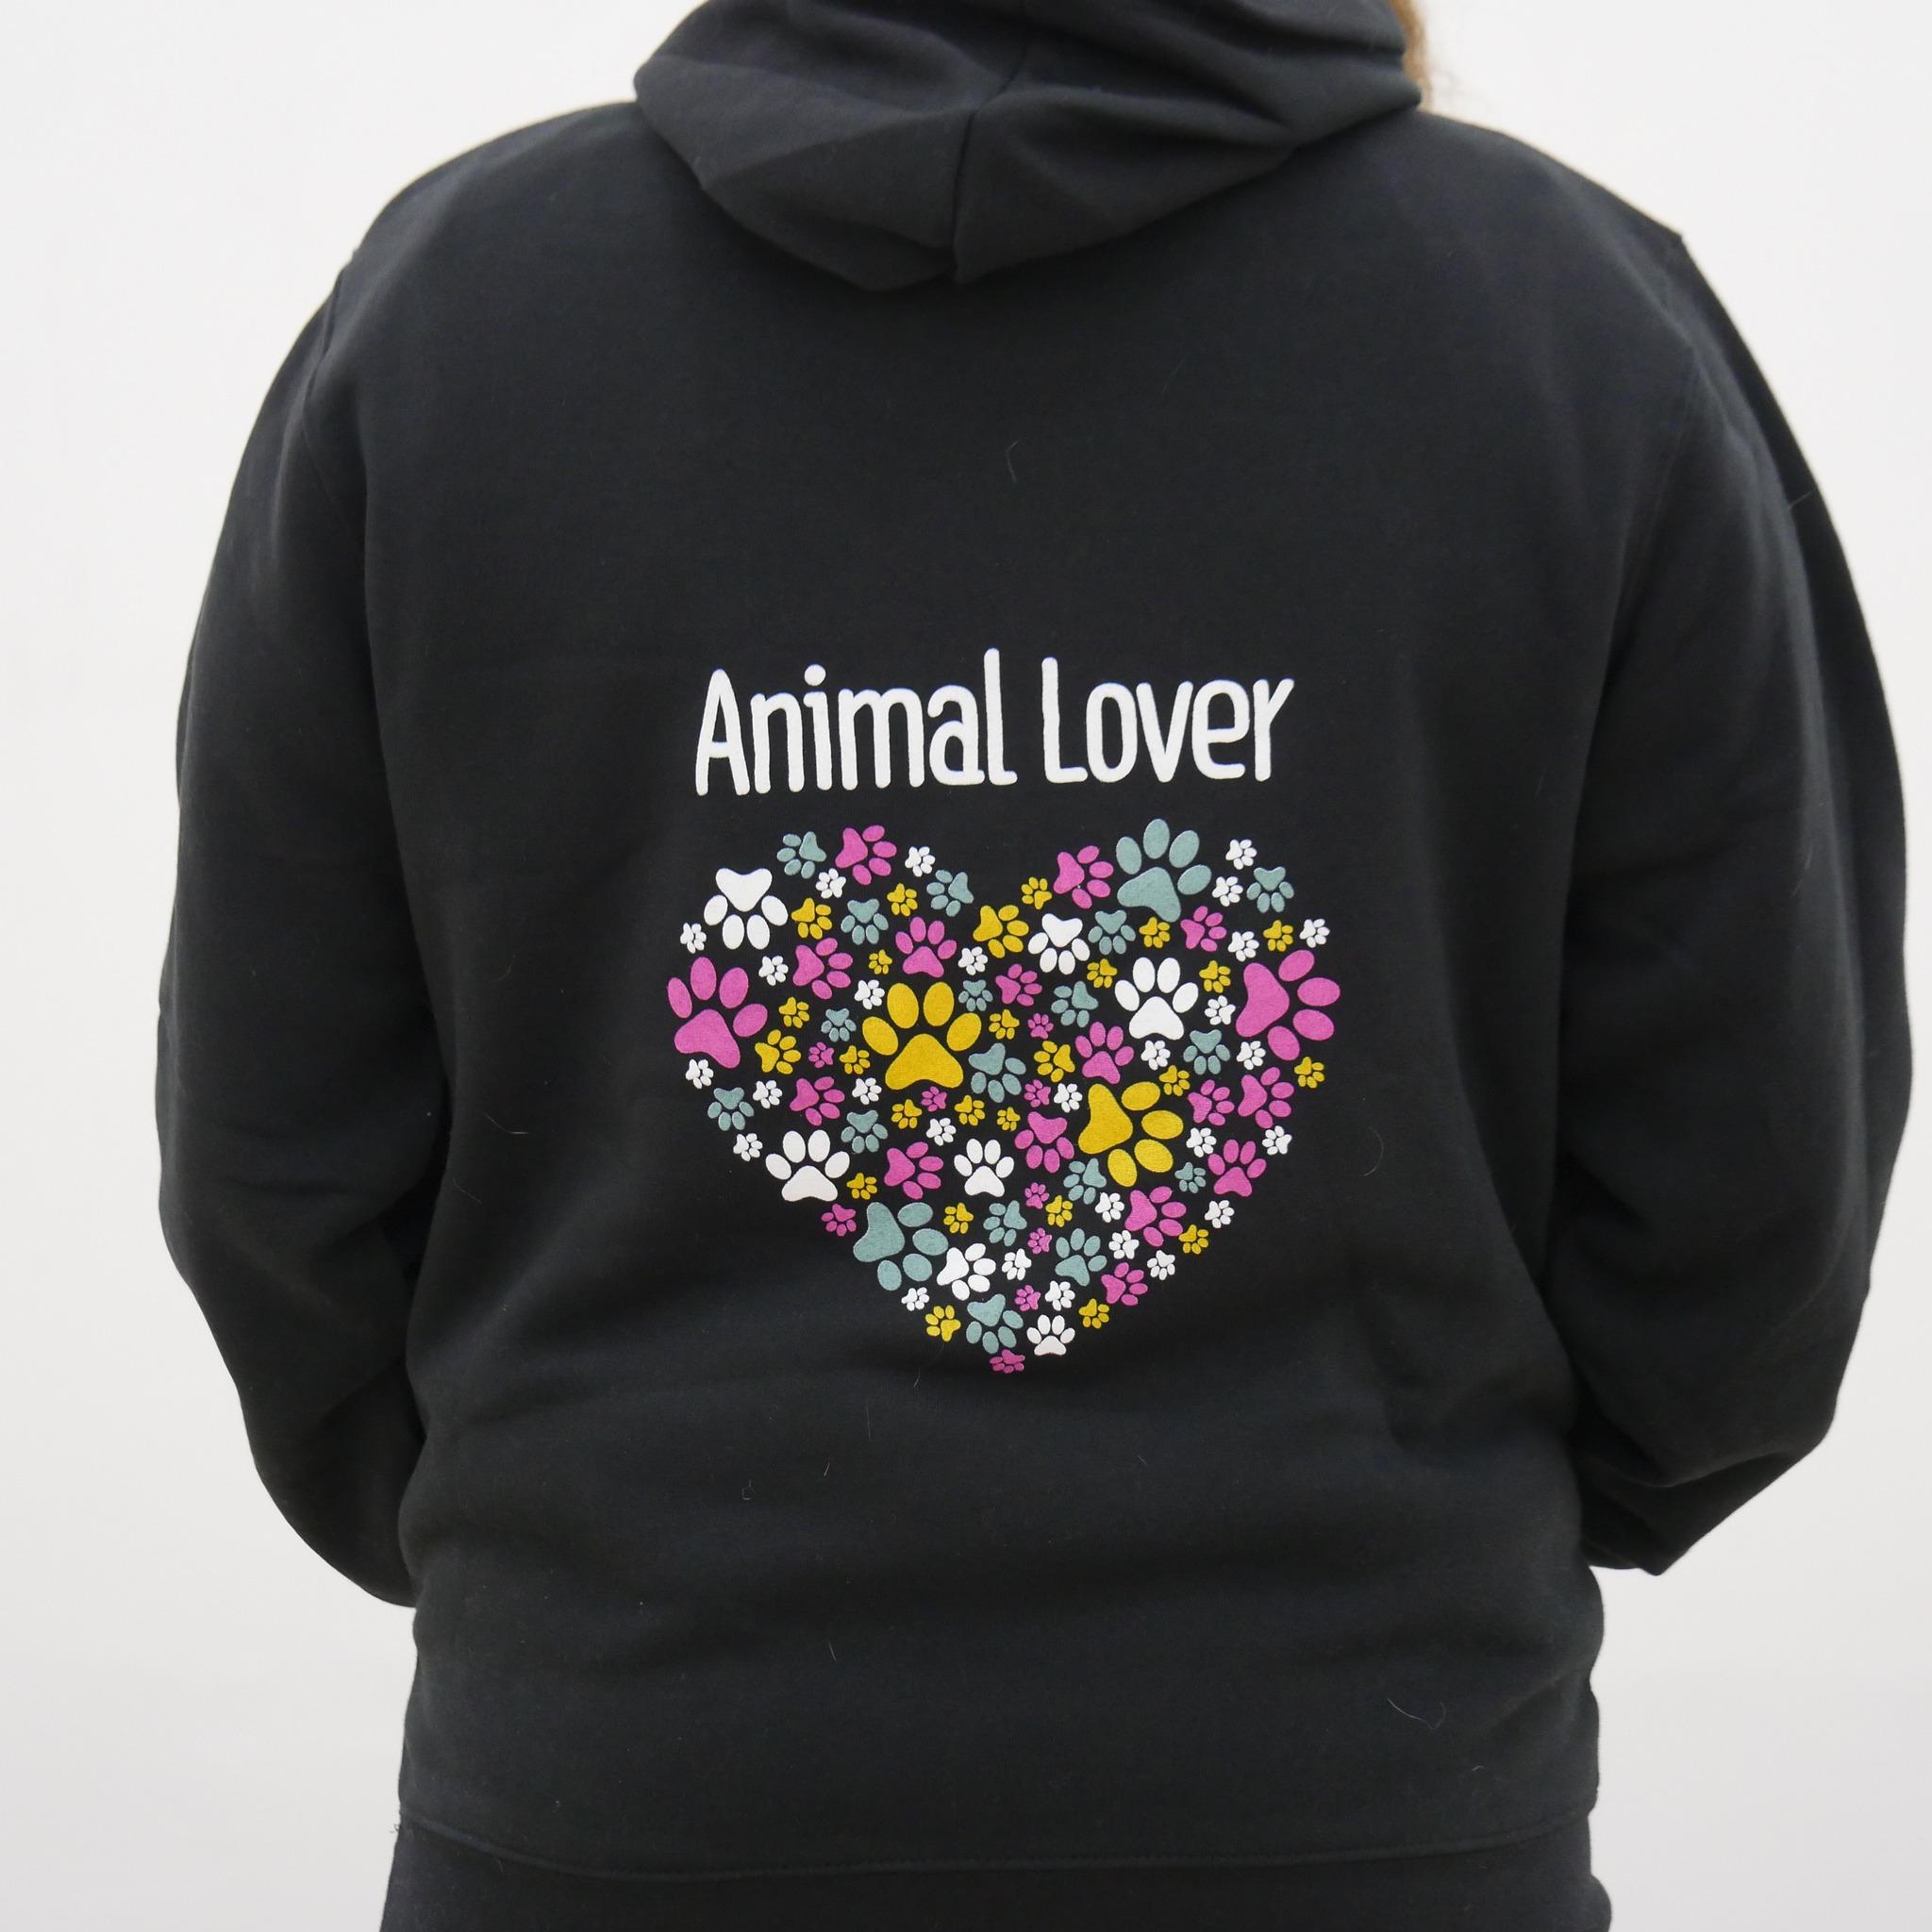 Animal lover - Animal footprint, gift for animal lover